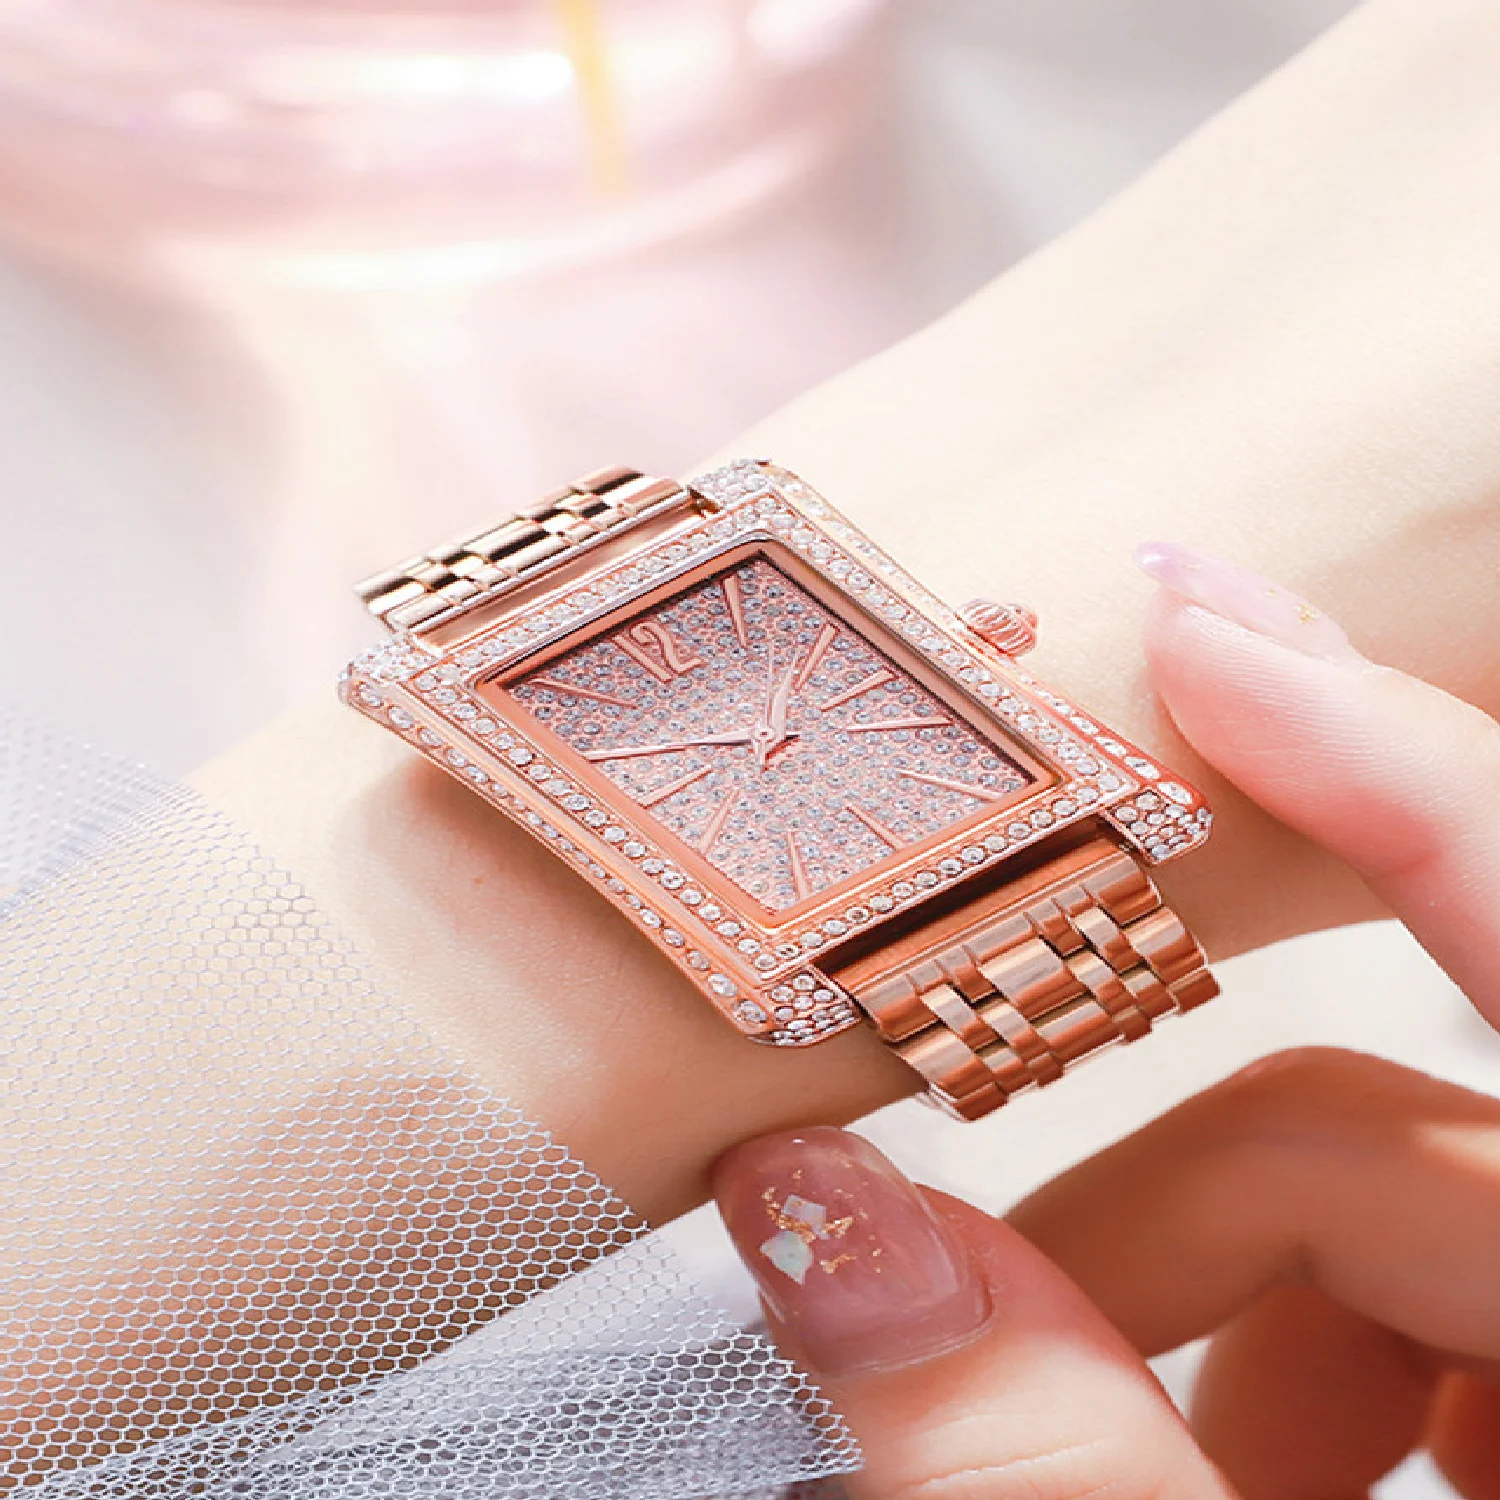 Top Brand Luxury New Ladies Diamond Watch Fashion Rectangle lady Wrist Watch Stainless Steel Simple Women Watch Relogio Feminino enlarge